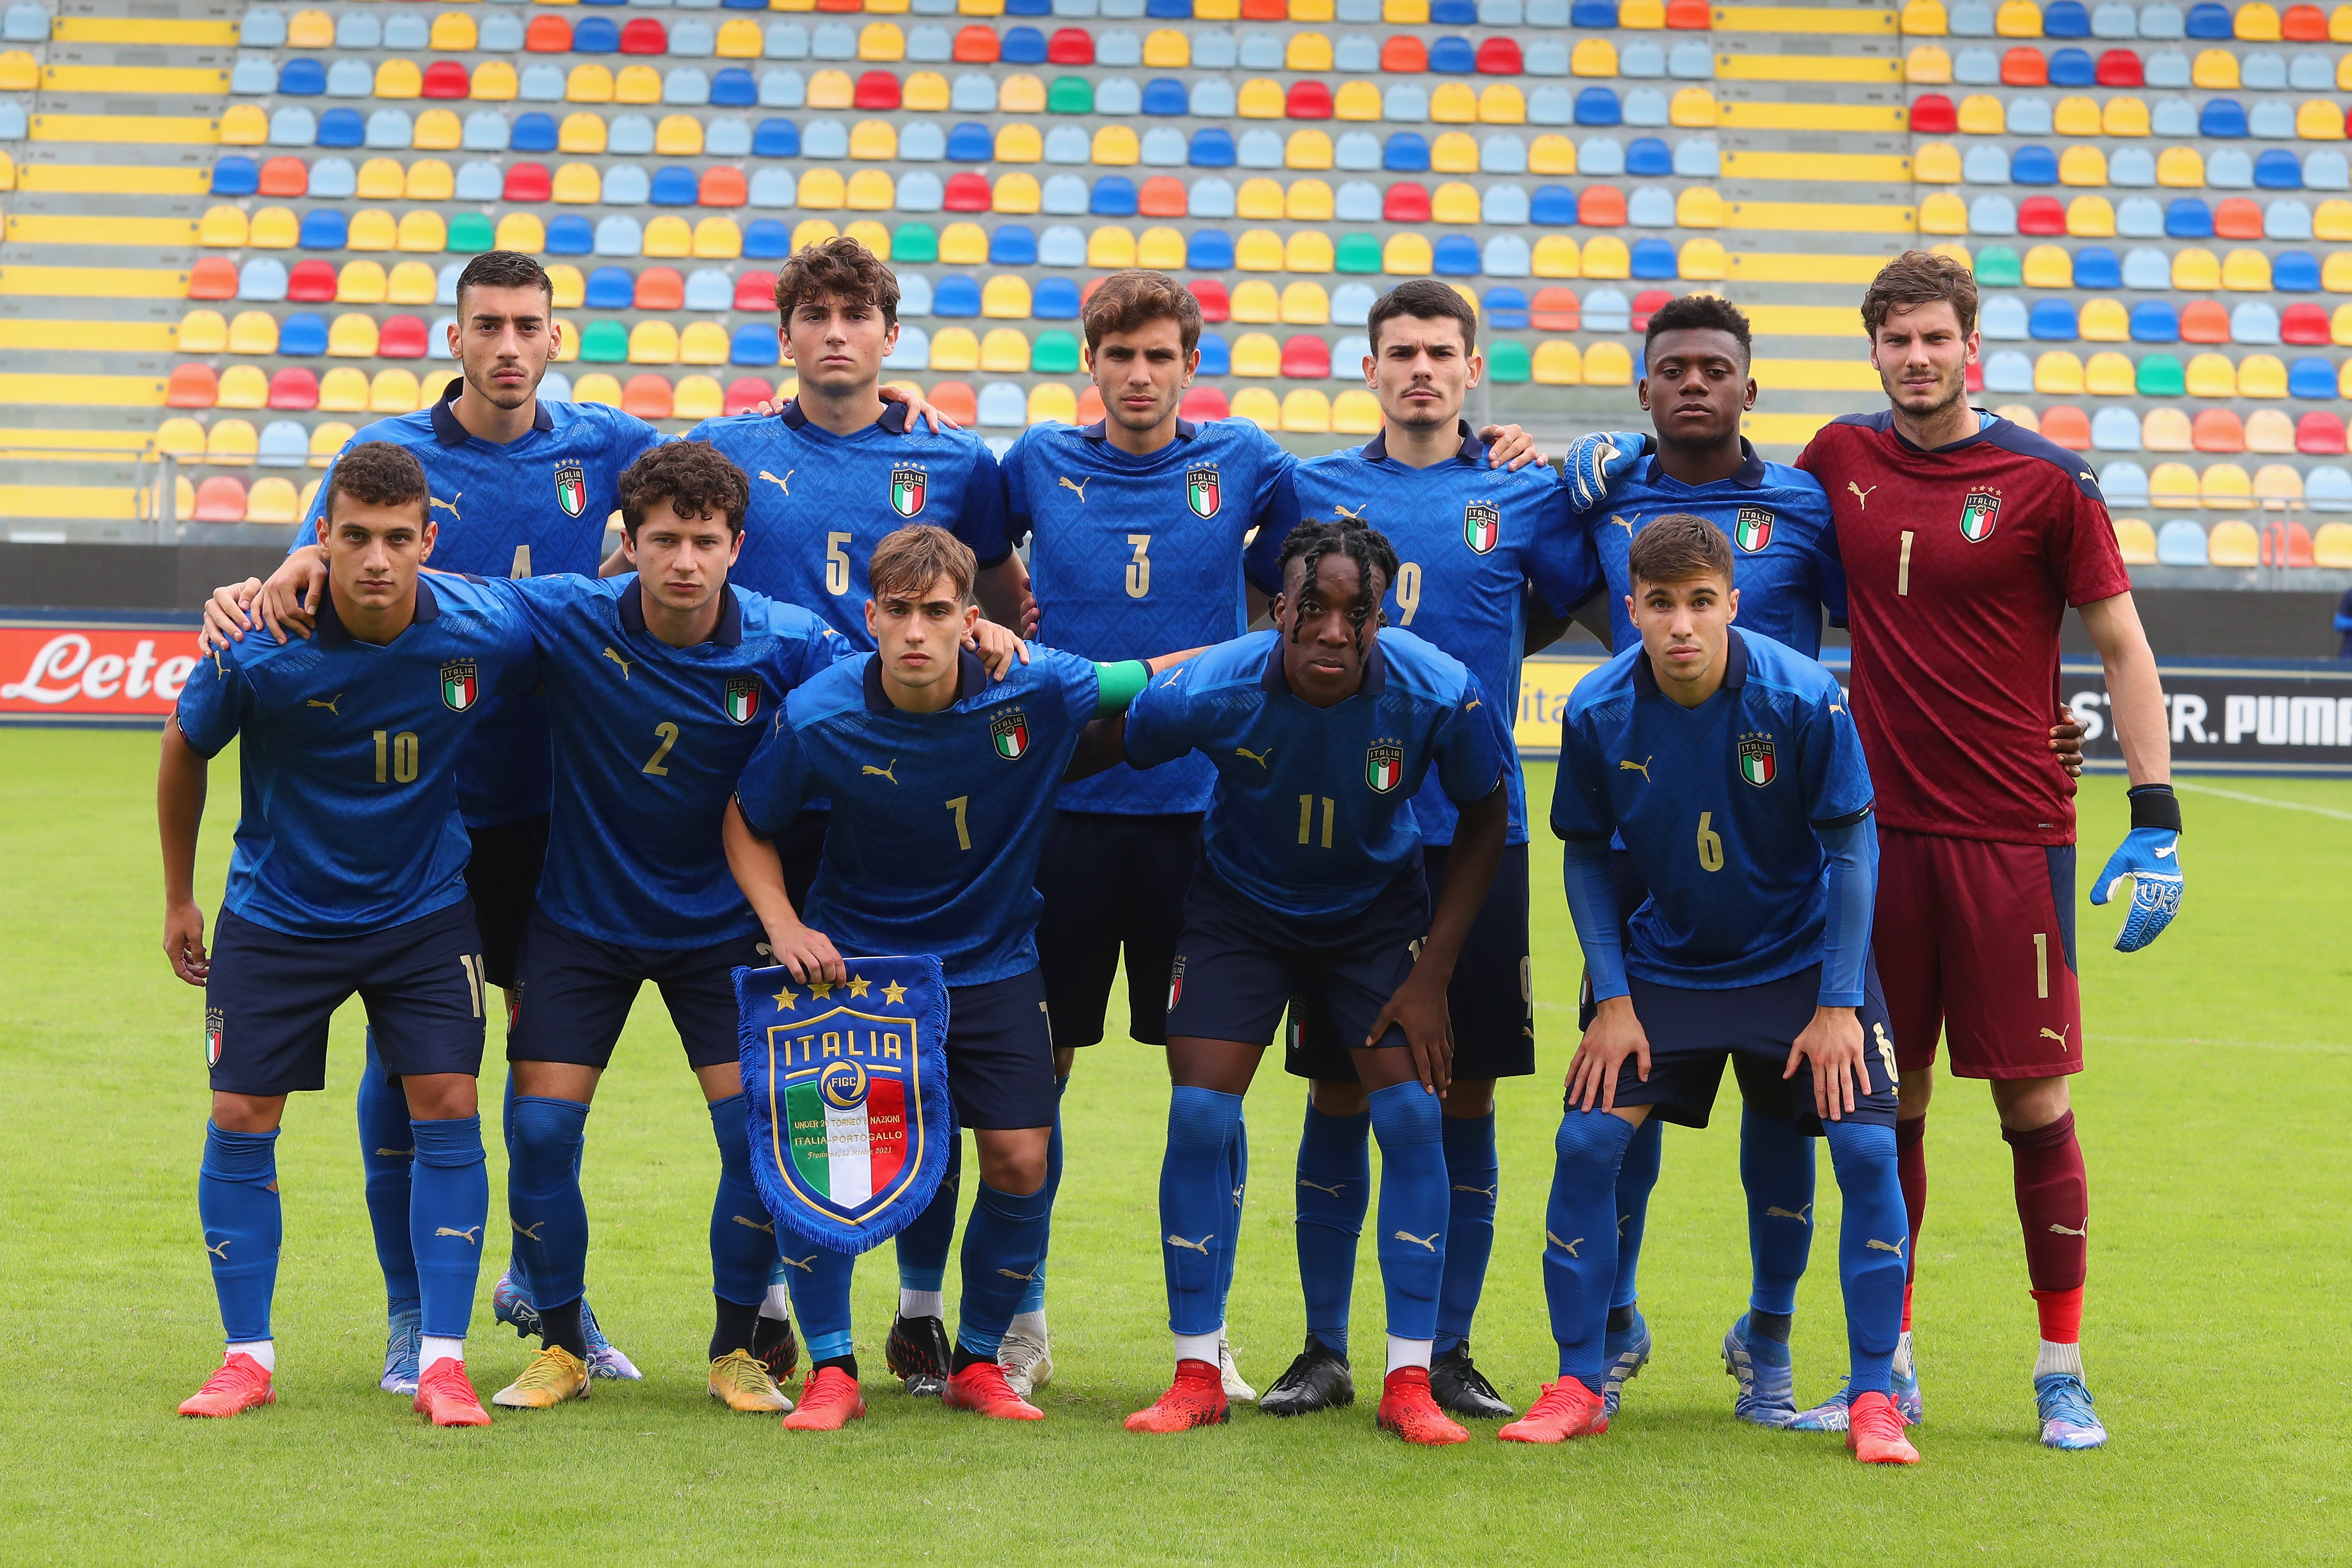 Sportivo Italiano U20 – Equipo de fútbol Italia